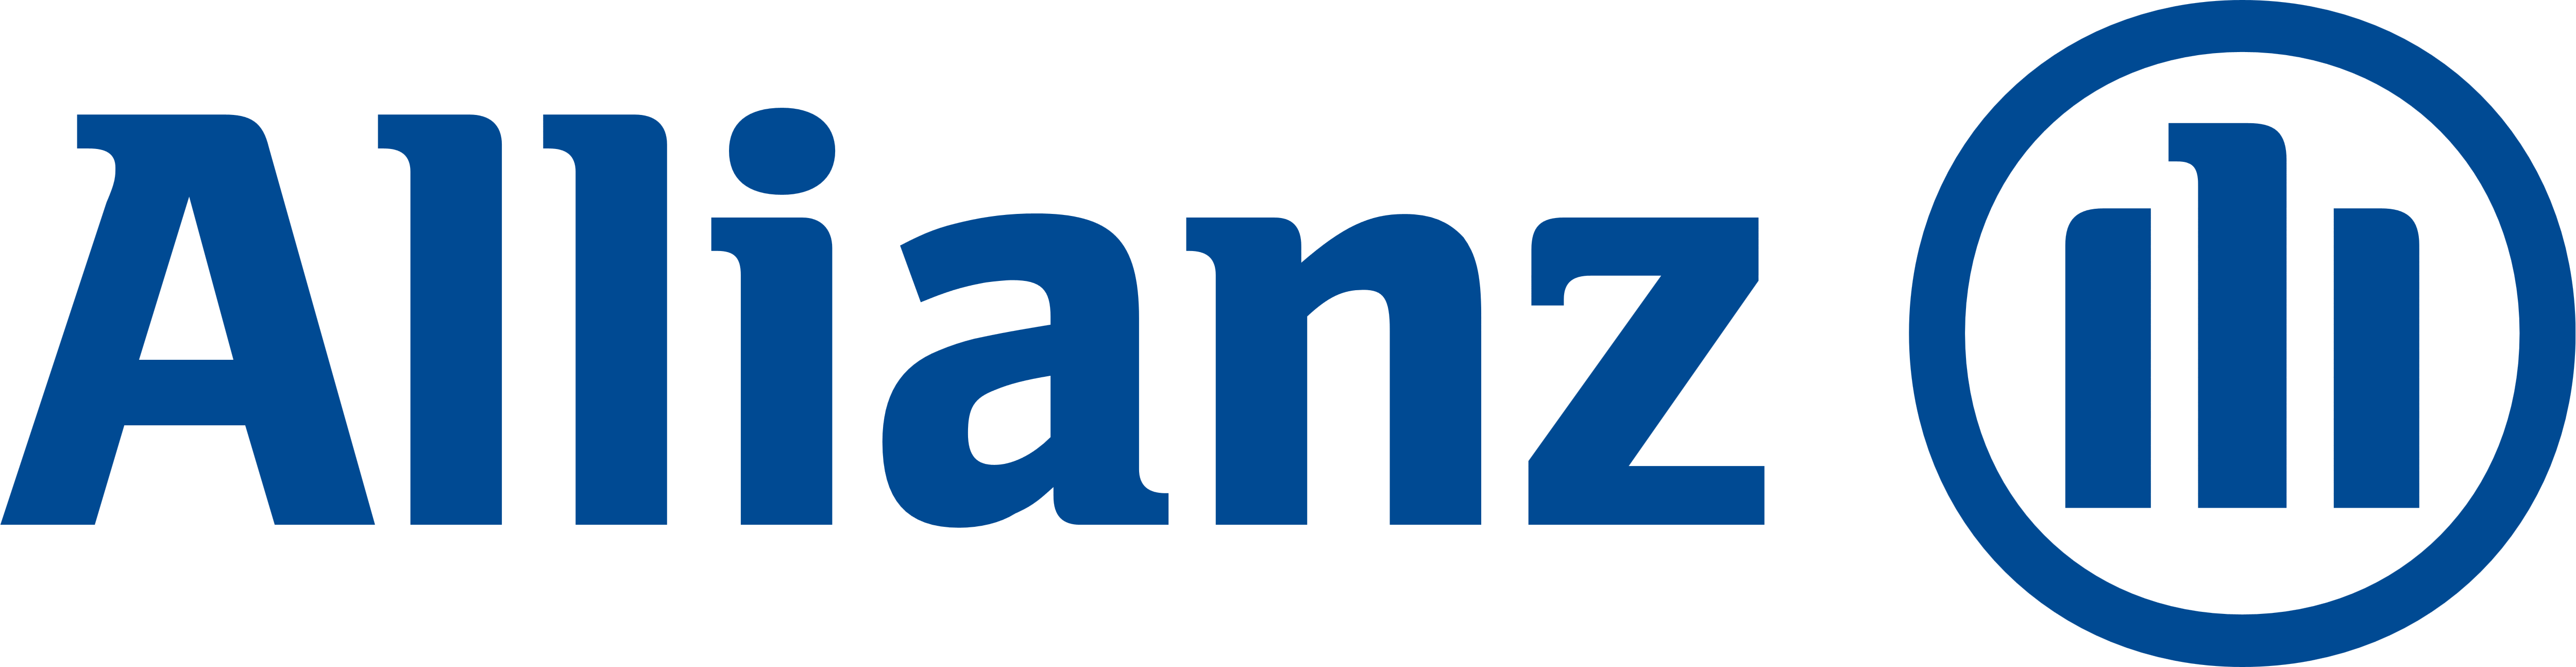 Allianz logó